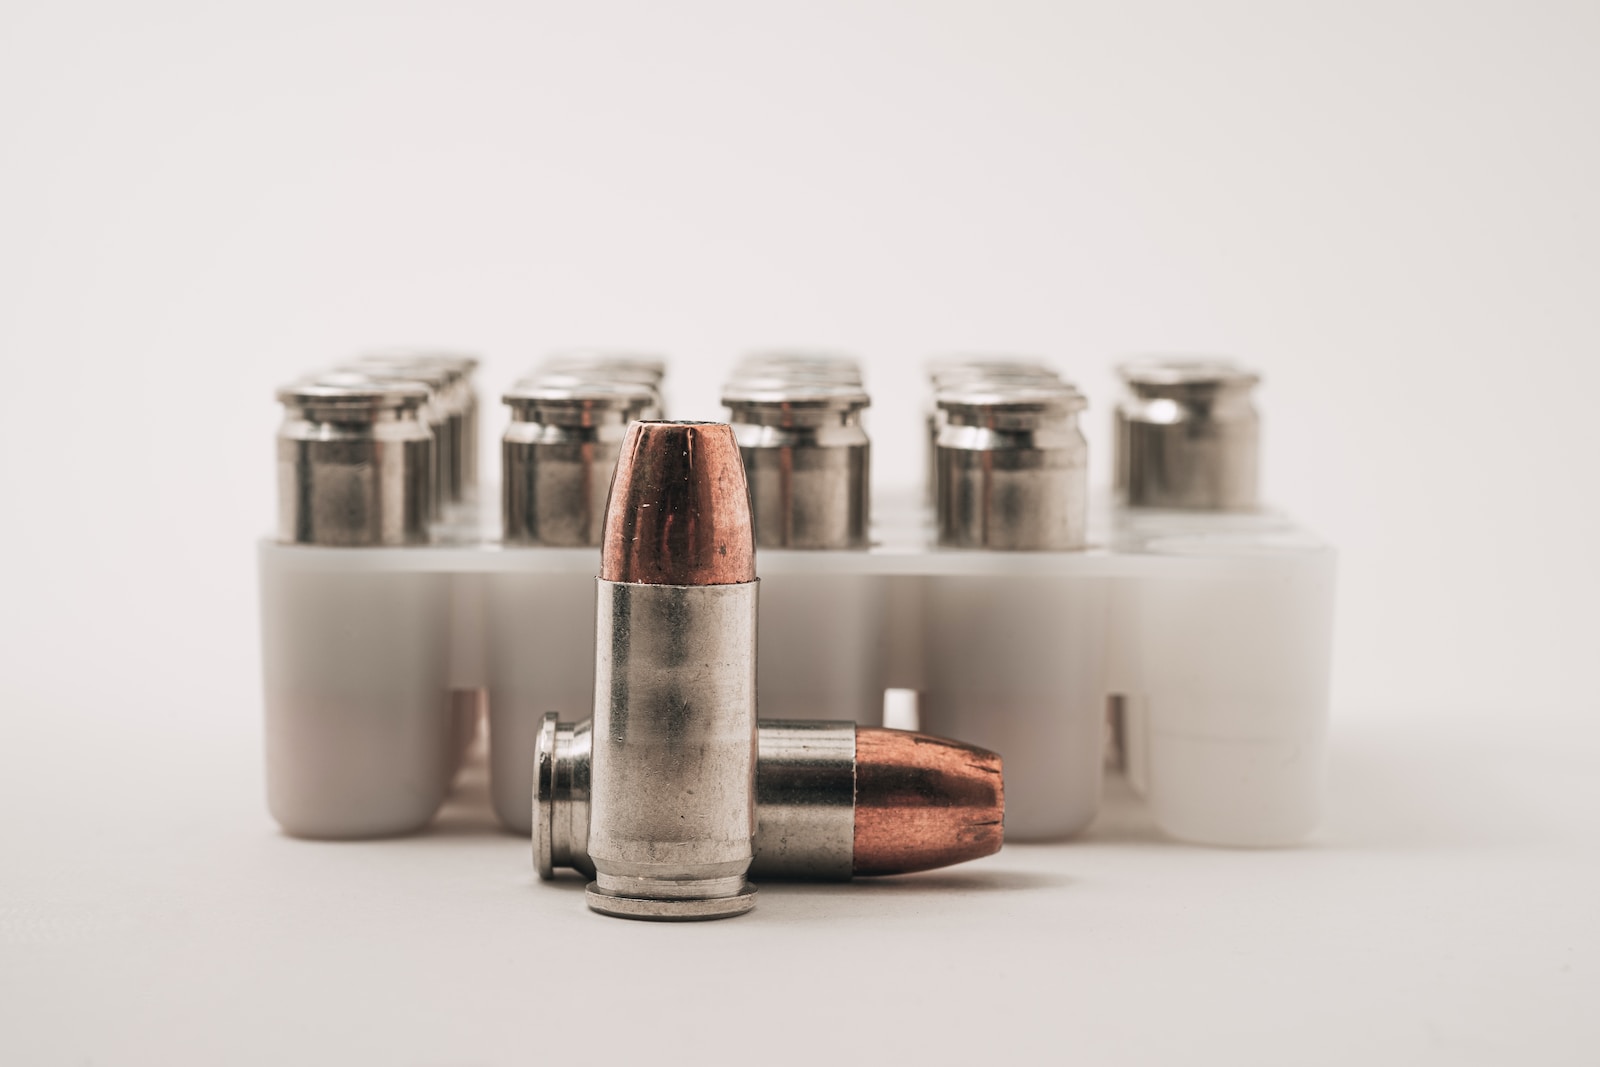 9mm vs 45 Caliber white and brown bottles on white table